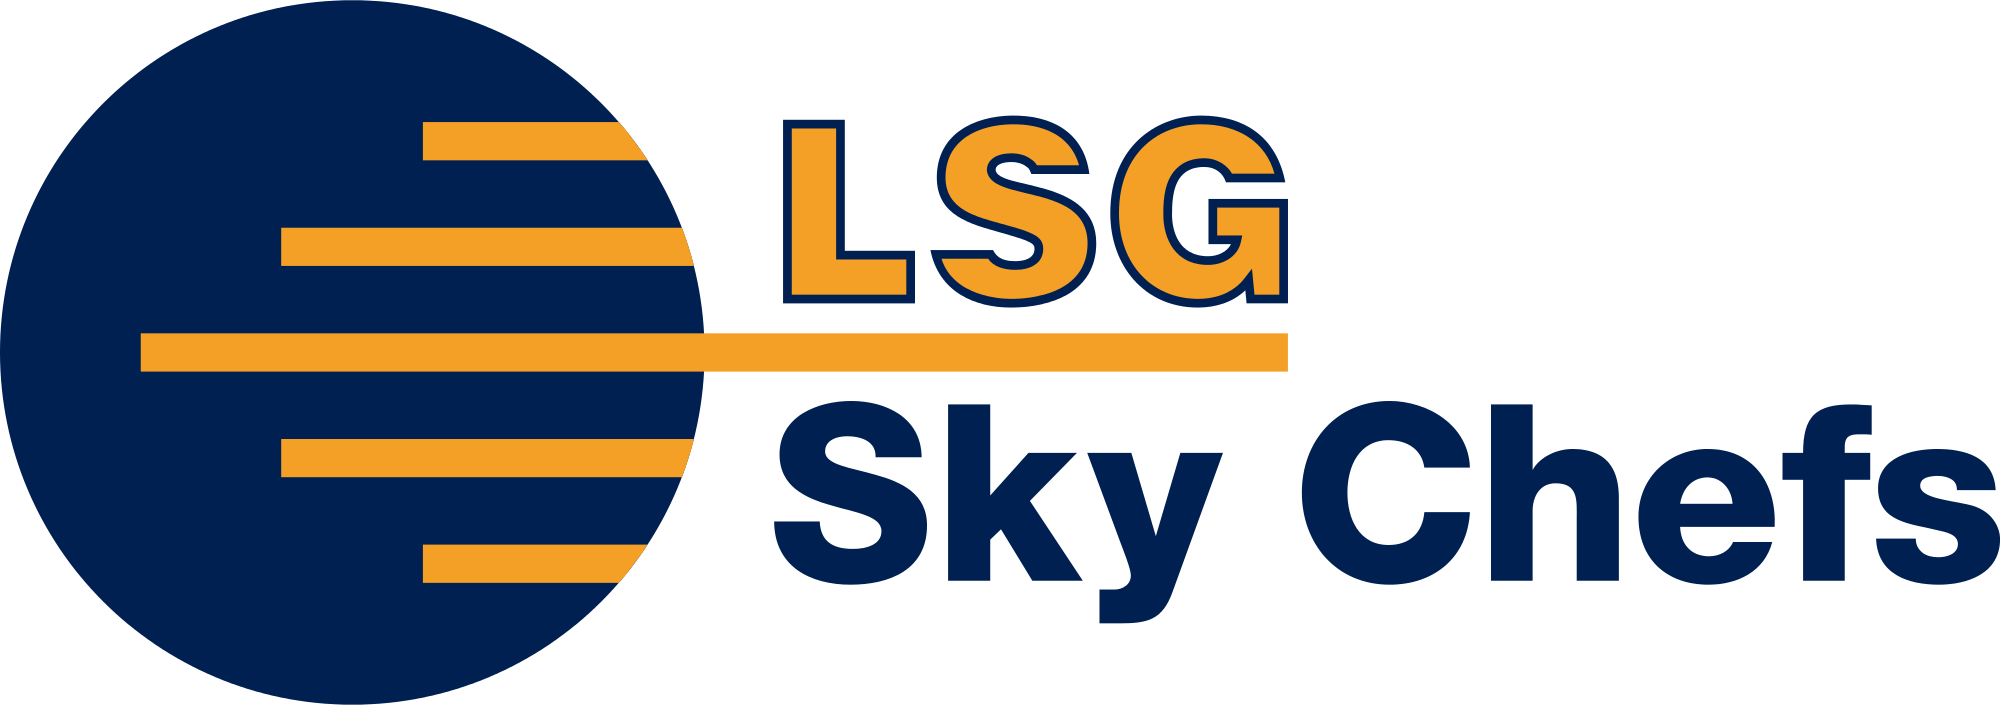 Open - Lufthansa Sky Chefs Logo (2000x705), Png Download